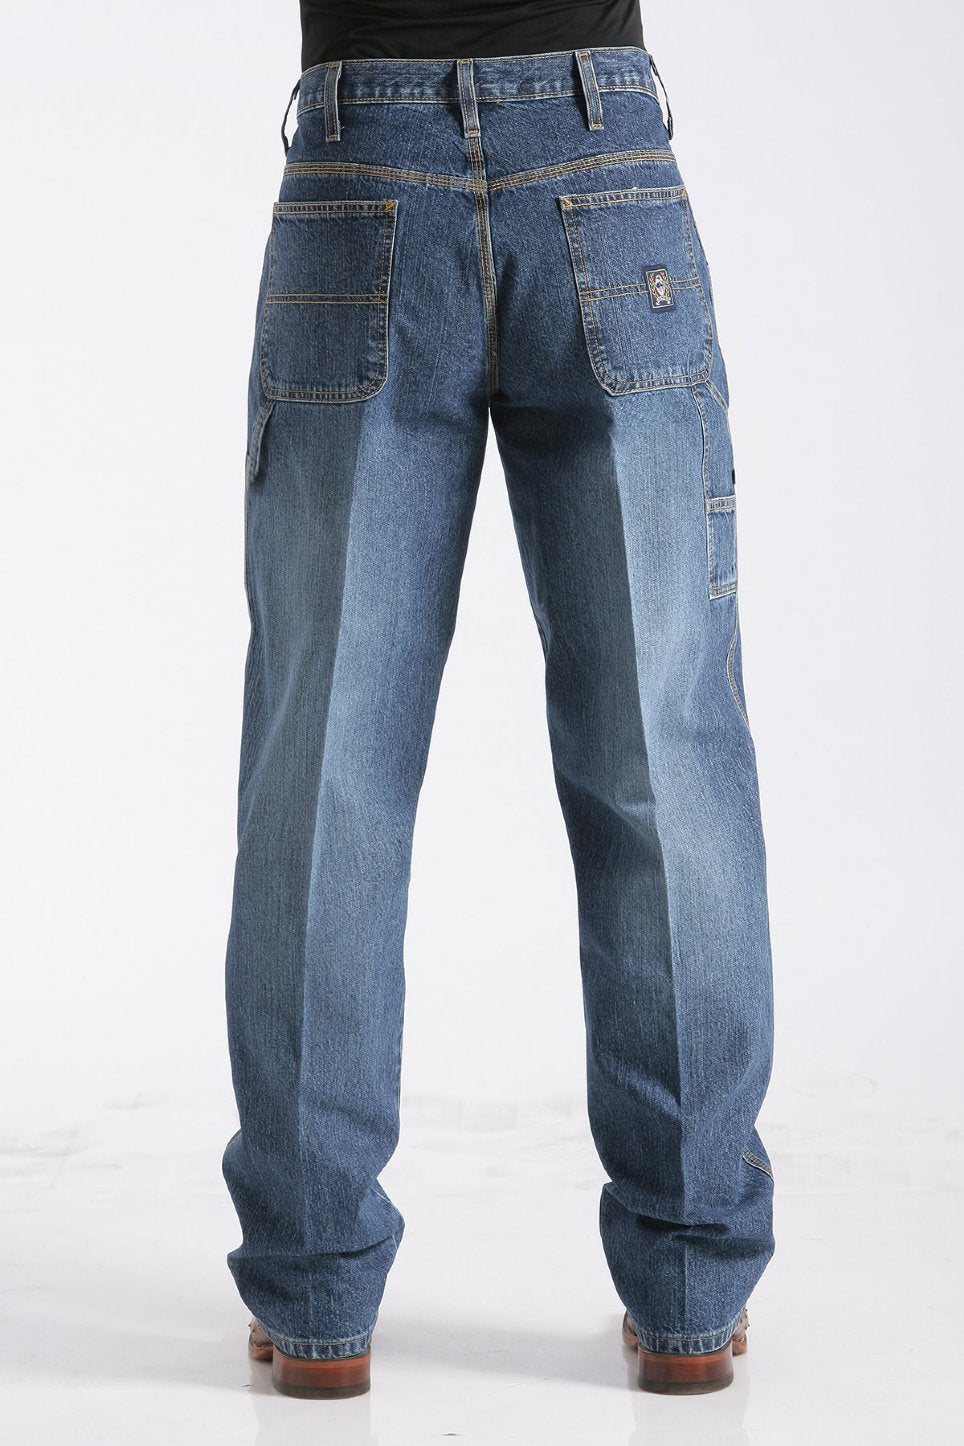 Cinch Mens Loose Fit Blue Label Jeans - Carpenter - MB90434002